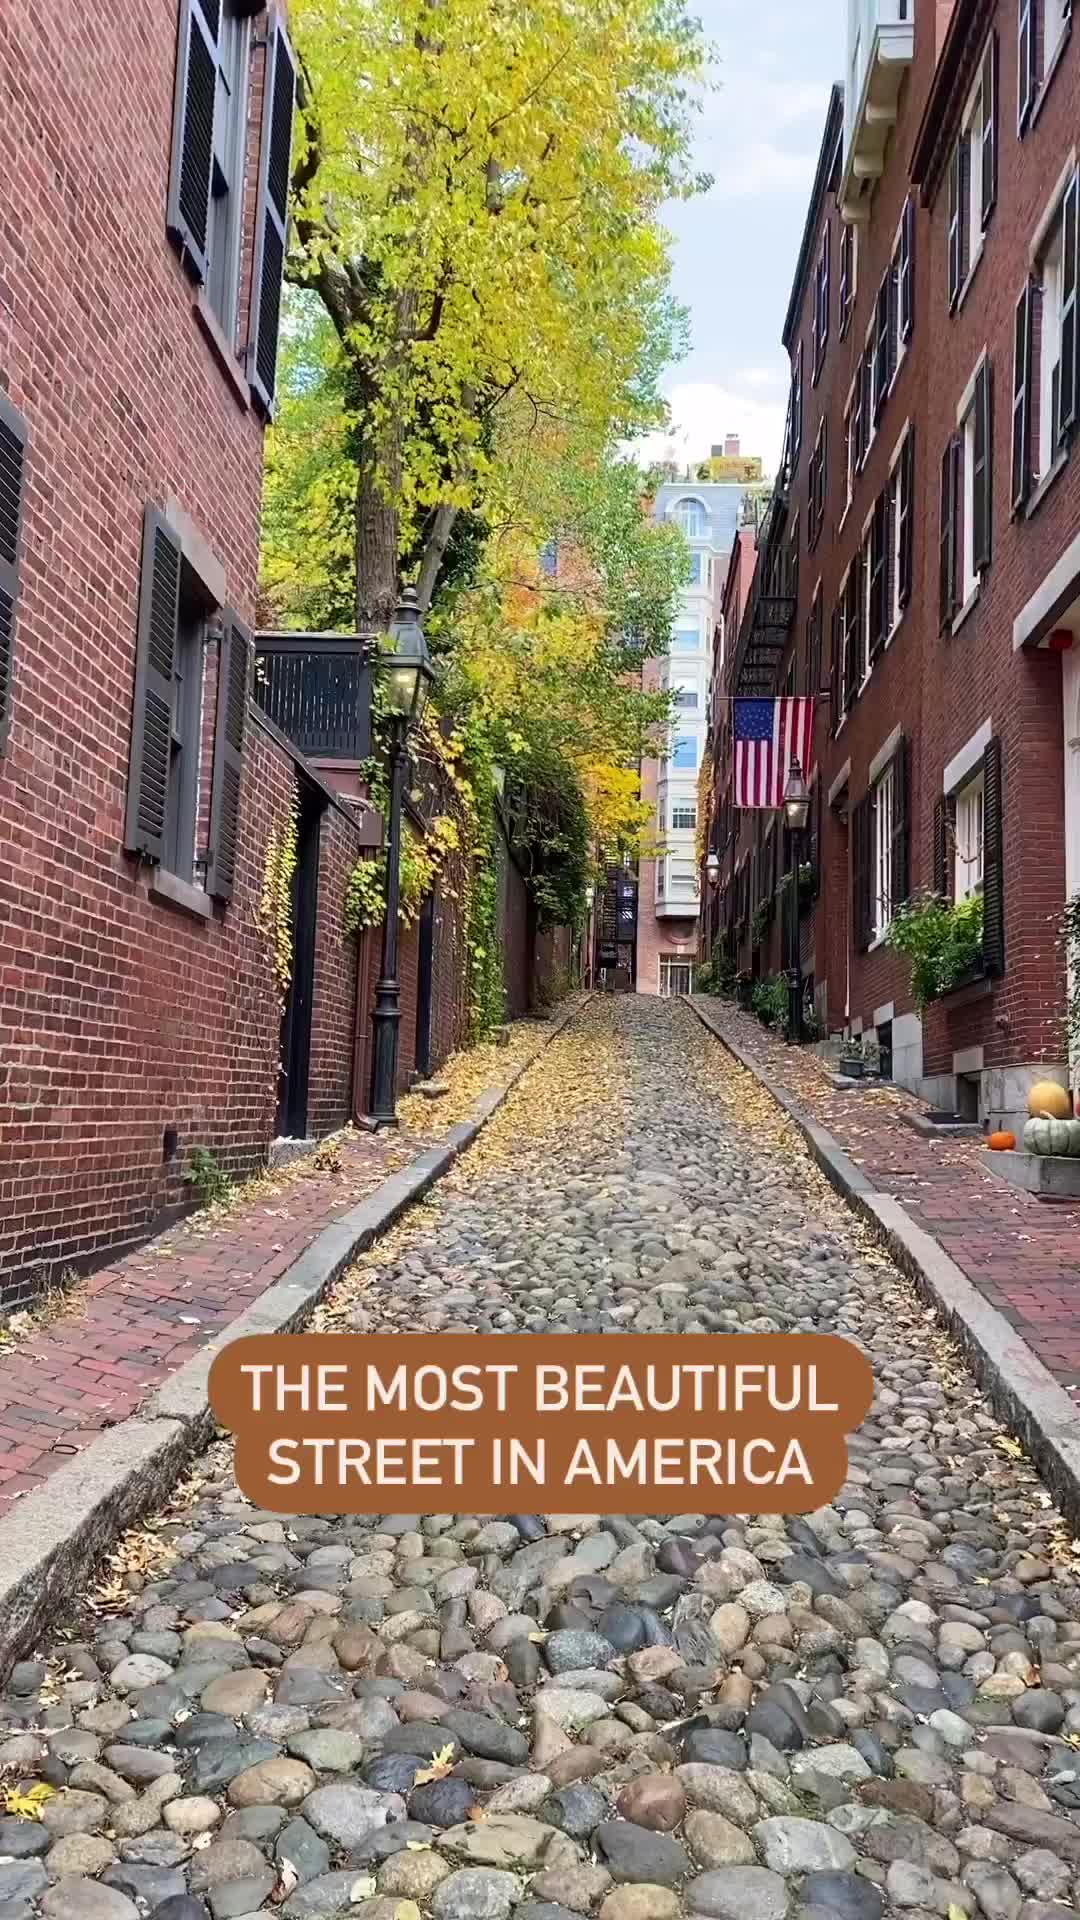 The Most Beautiful Street in America: Acorn Street, Boston